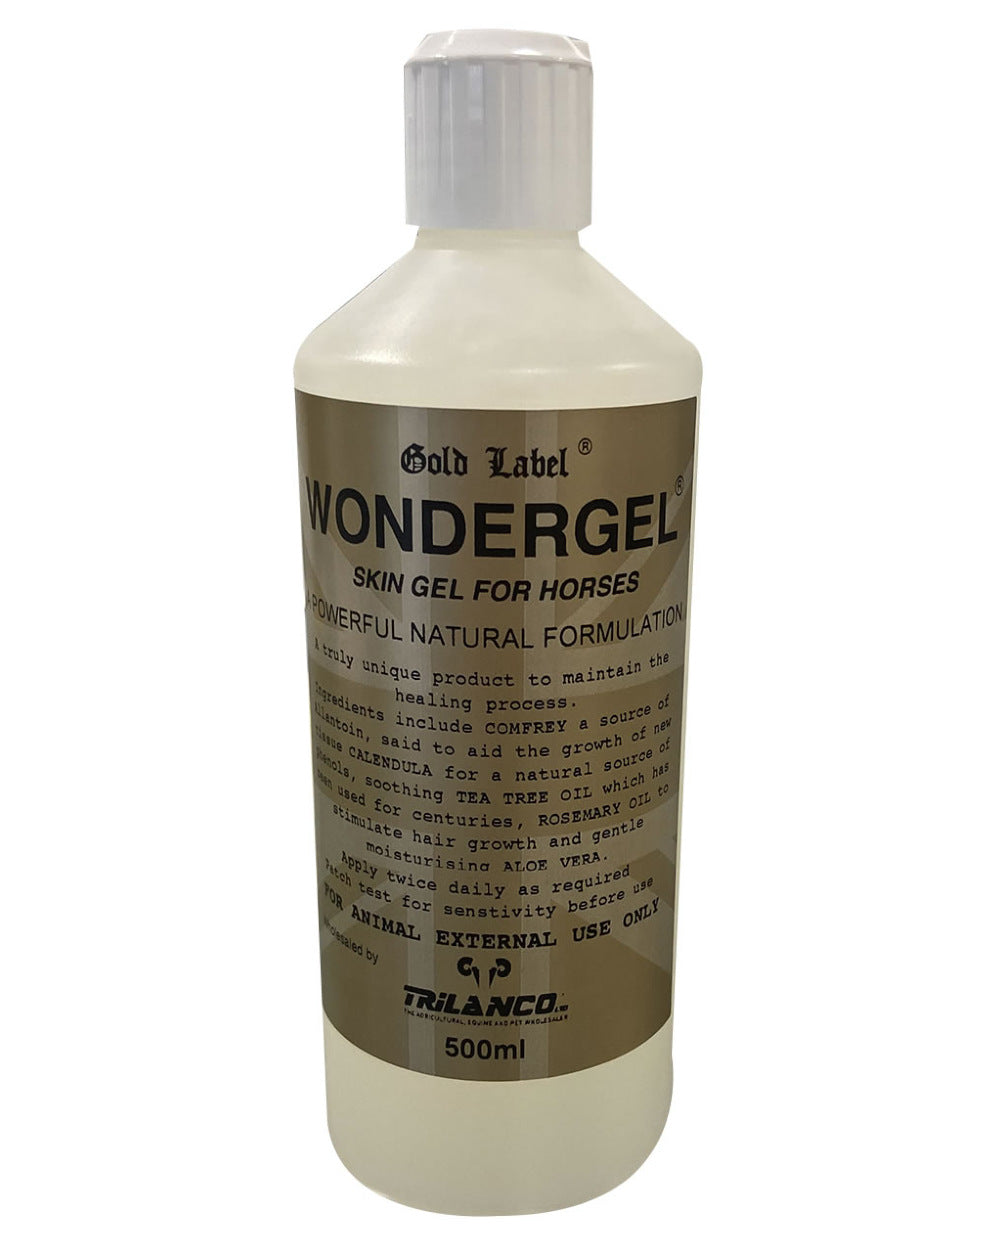 Gold Label Wondergel On A White Background